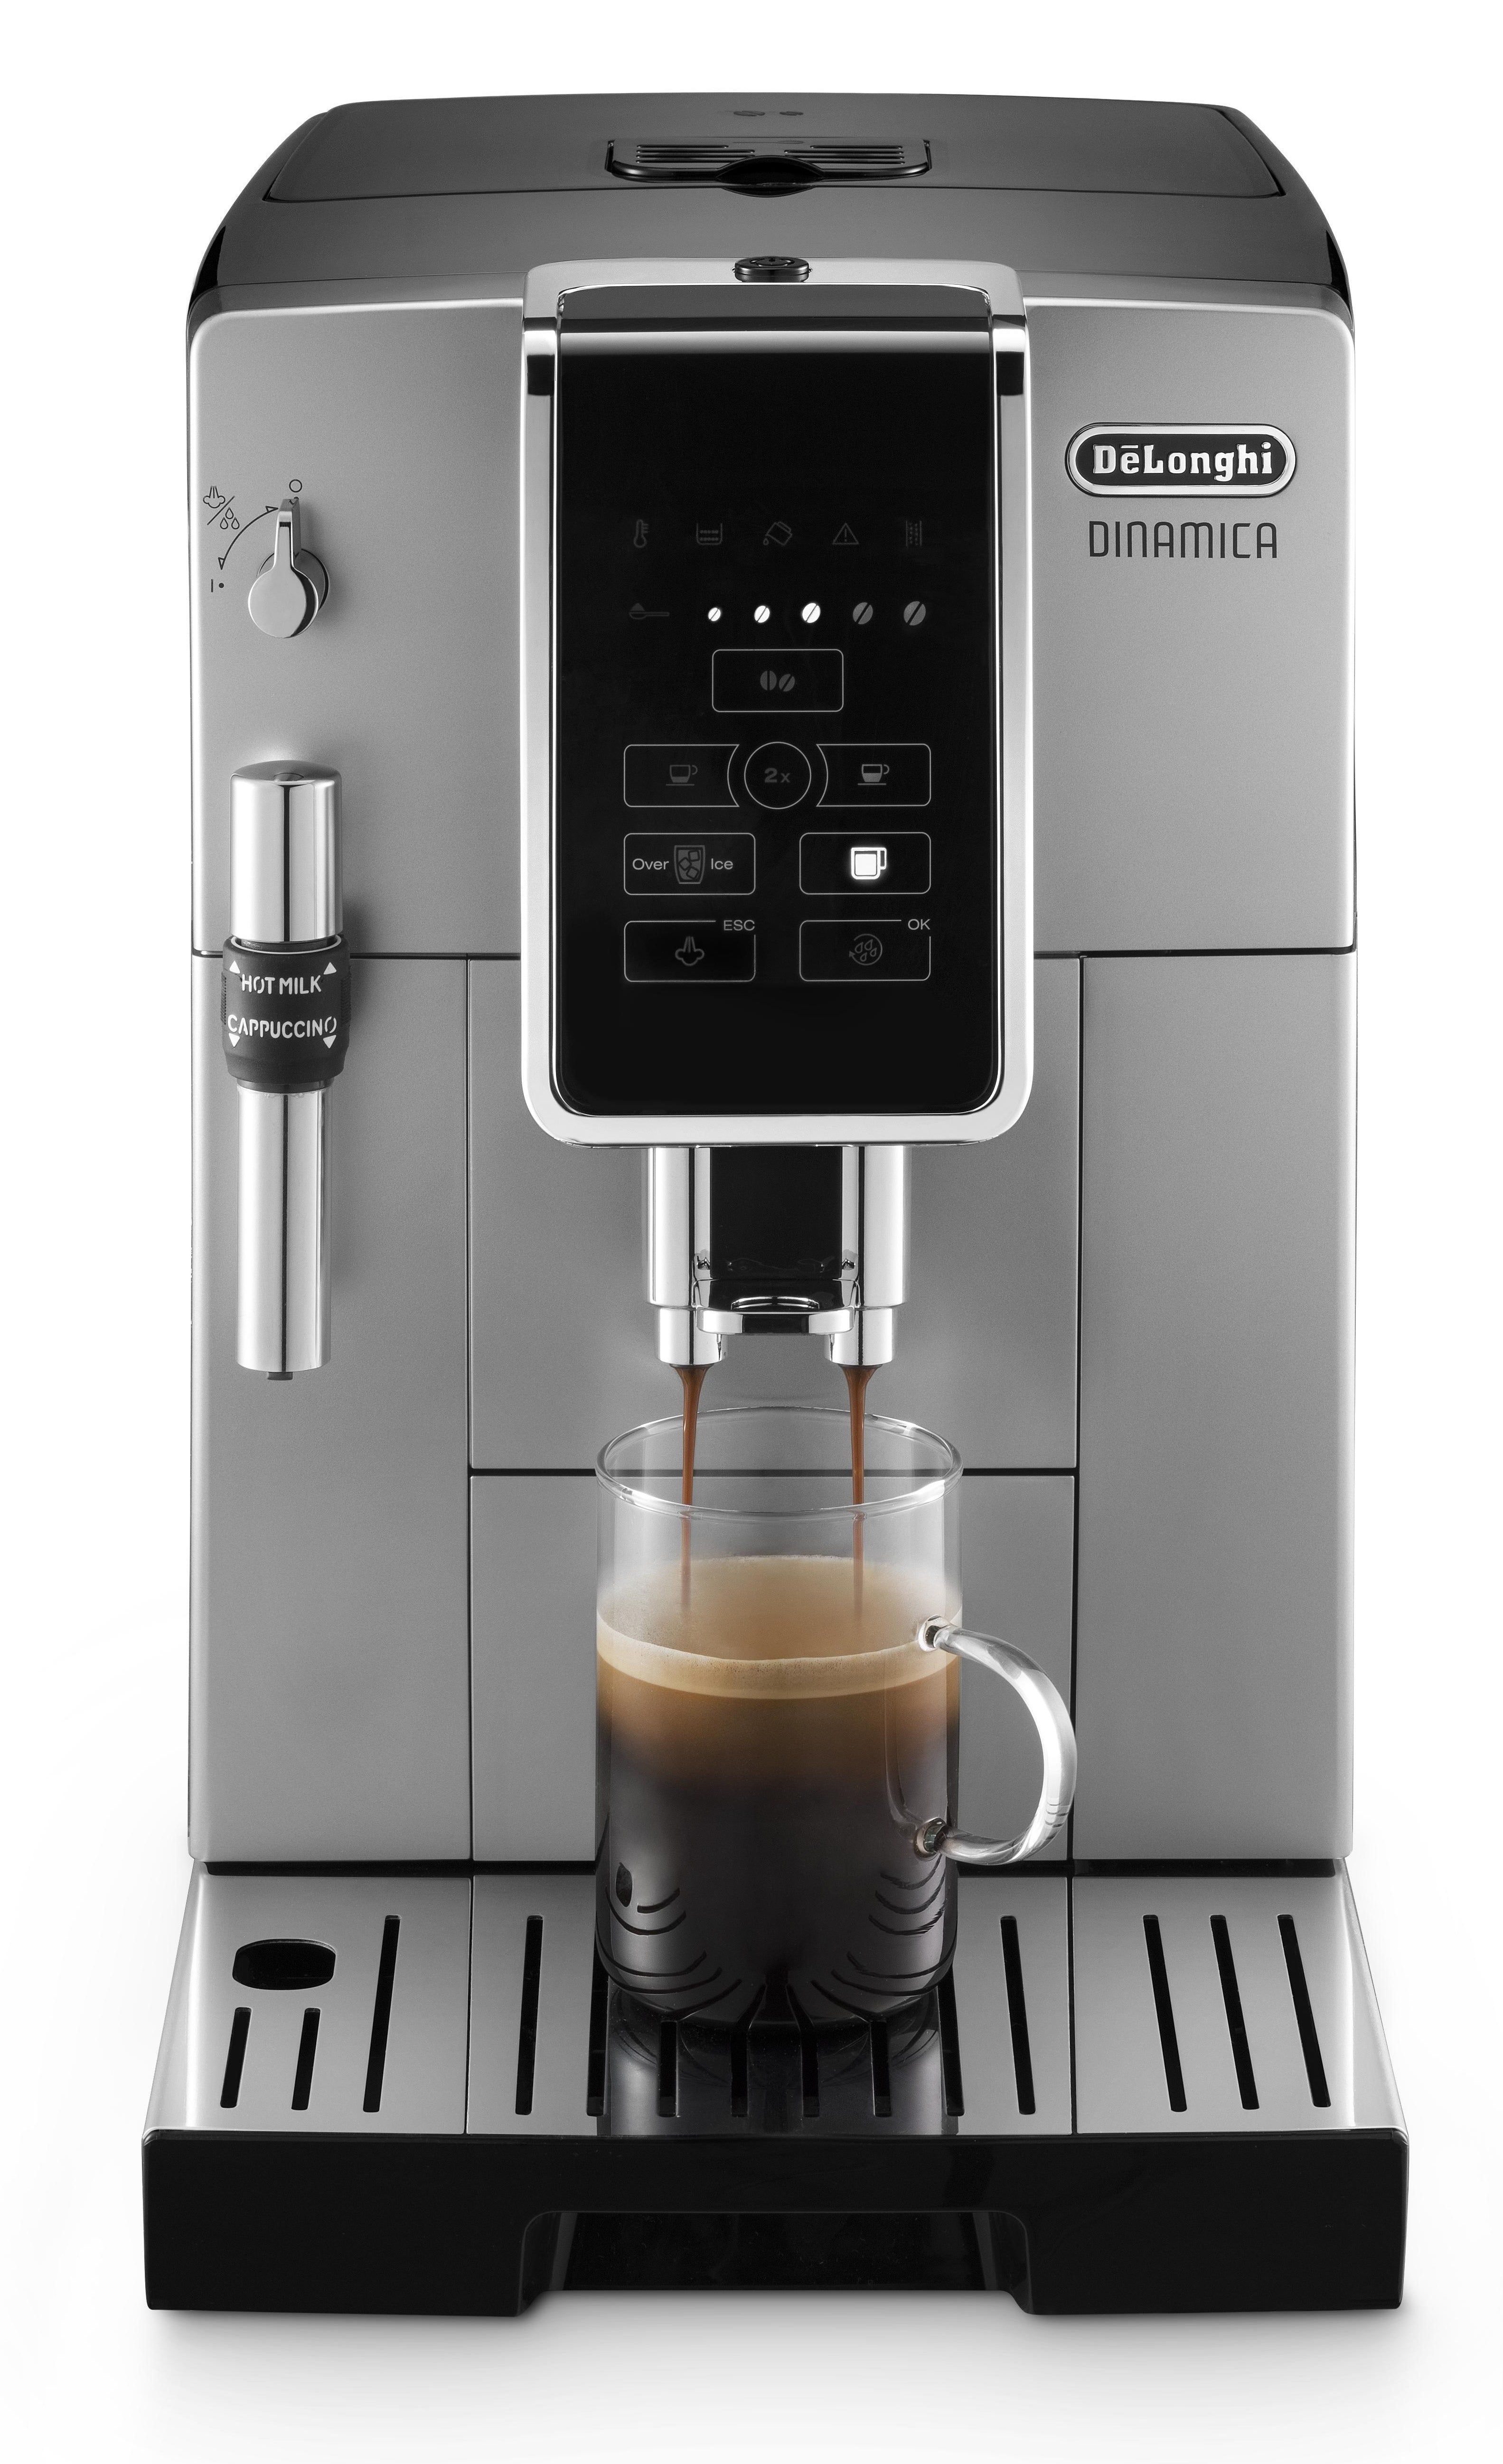 Delonghi Coffee Machine Dinamica Manual Muscle Testing